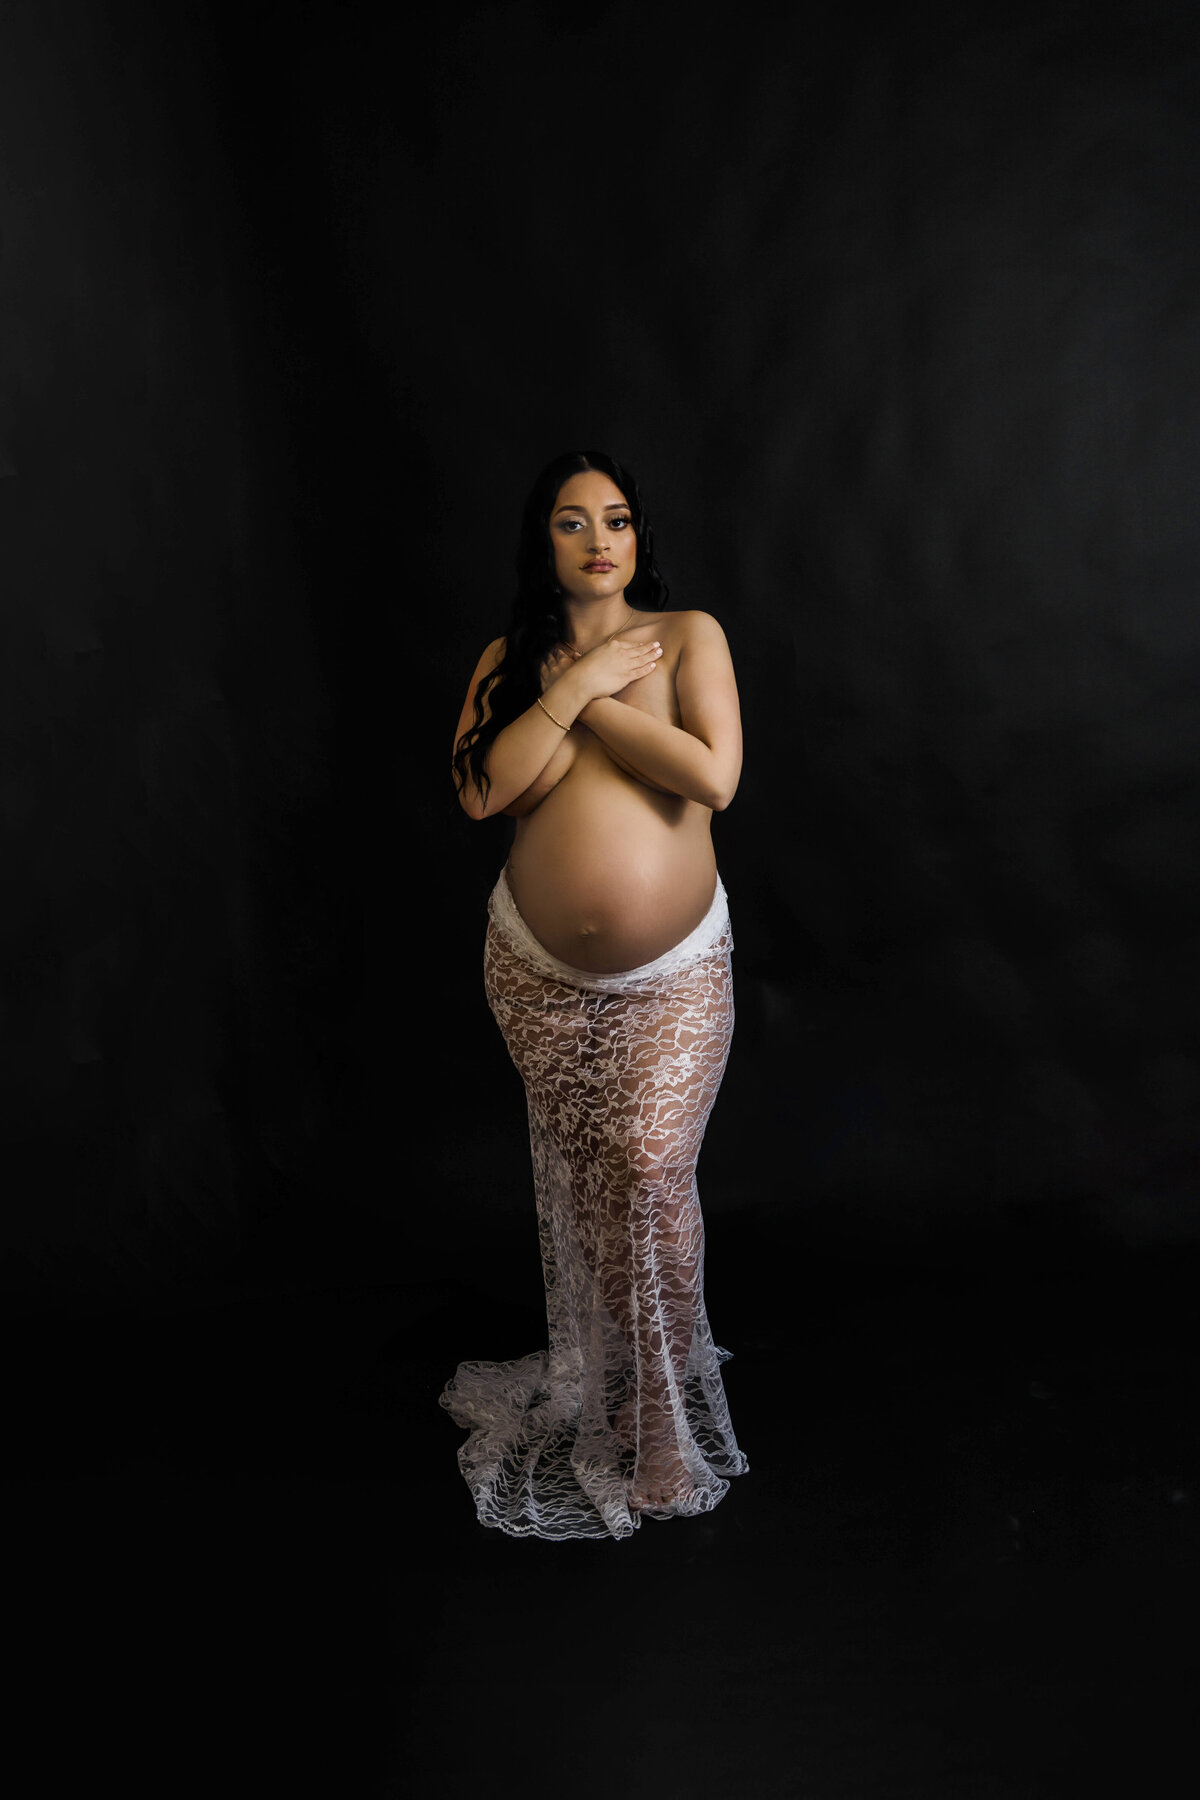 connecticut-maternity-photographer-15jpg